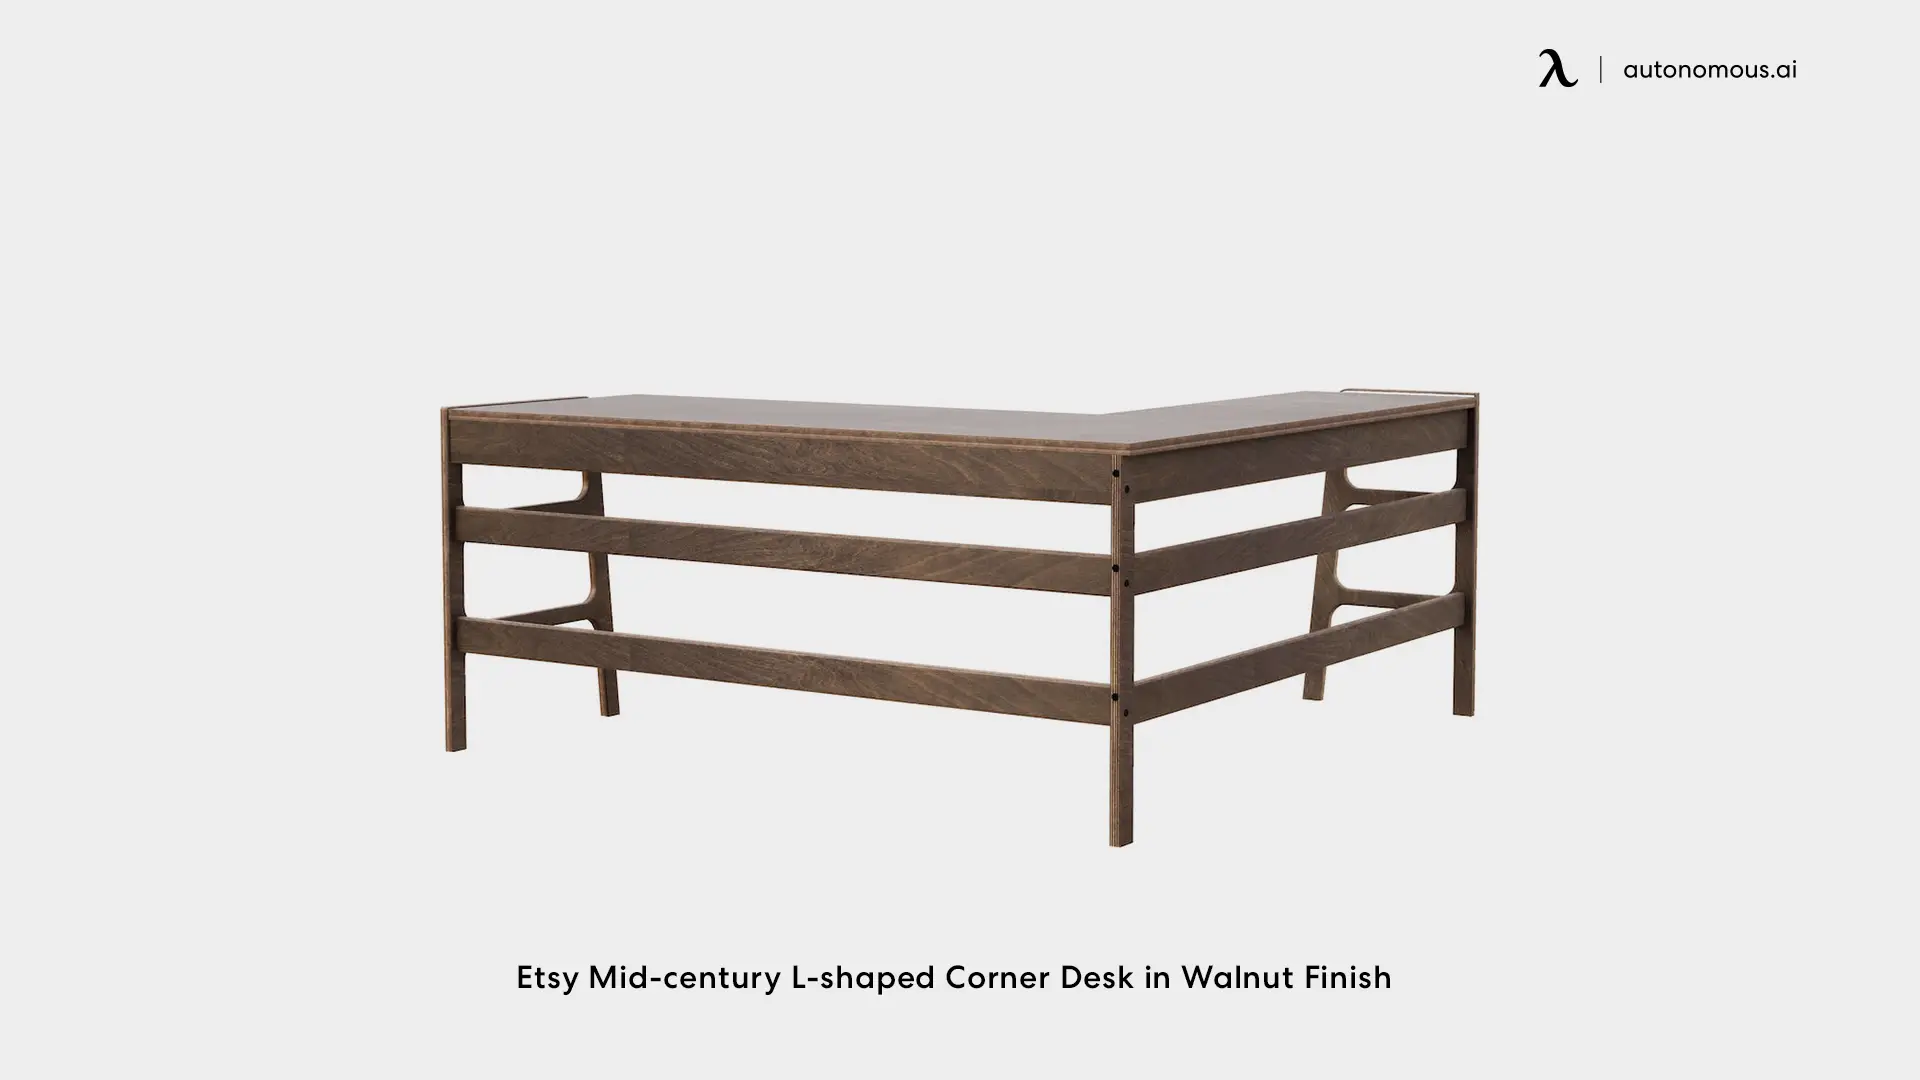 Etsy Mid-century L-shaped Corner Desk in Walnut Finish